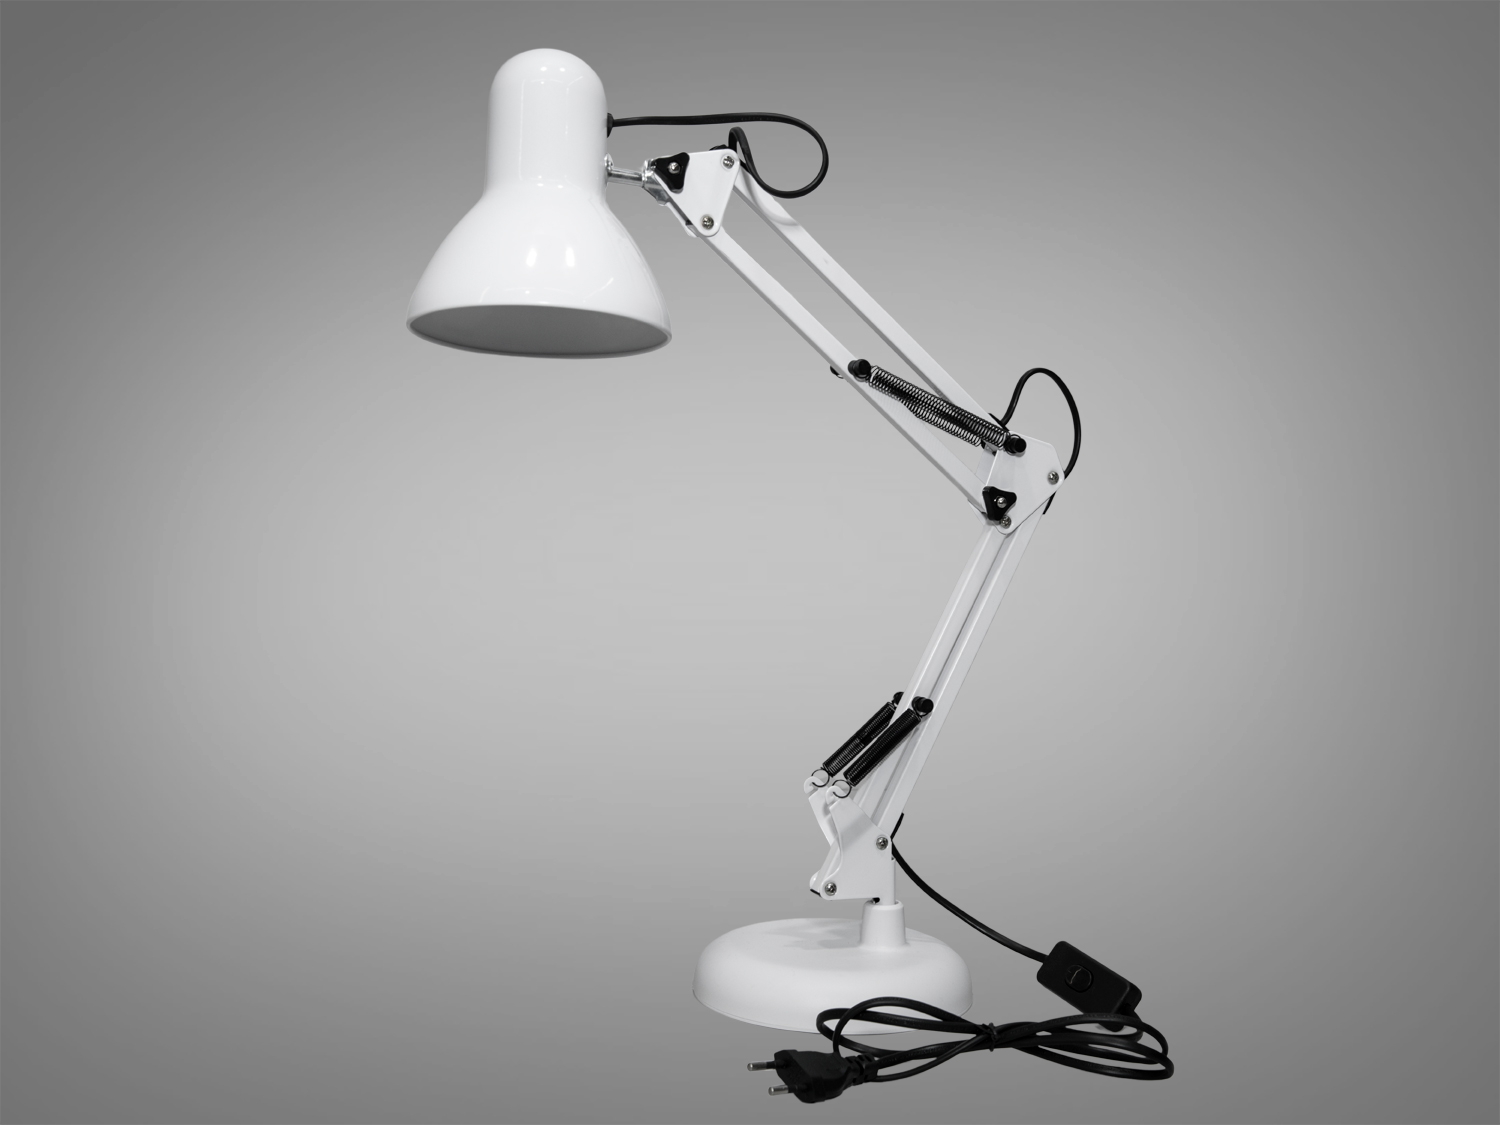 Настільна класична офісна біла лампа в стилі ролика кіностудії PixarНастольные лампы, Новинки